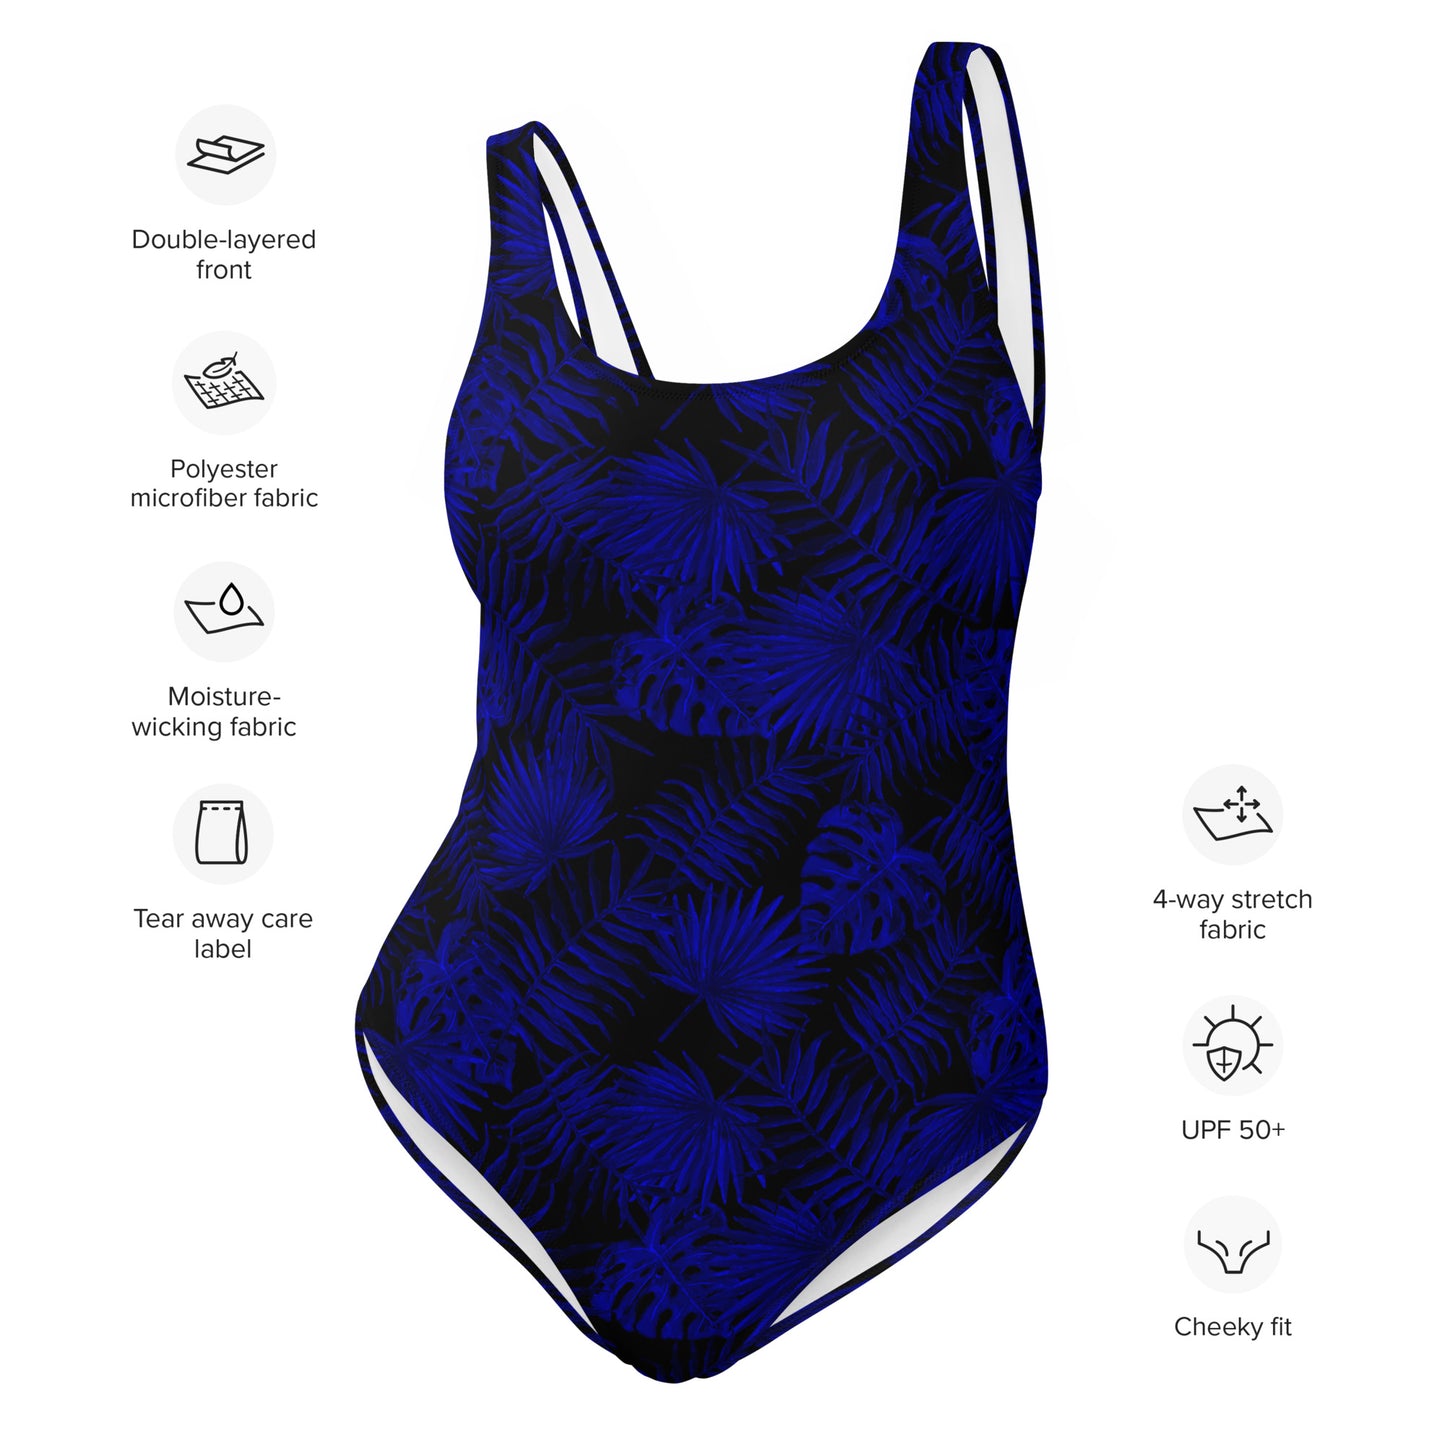 Snooty Fox Art One-Piece Swimsuit - Dark Blue Palm Pattern